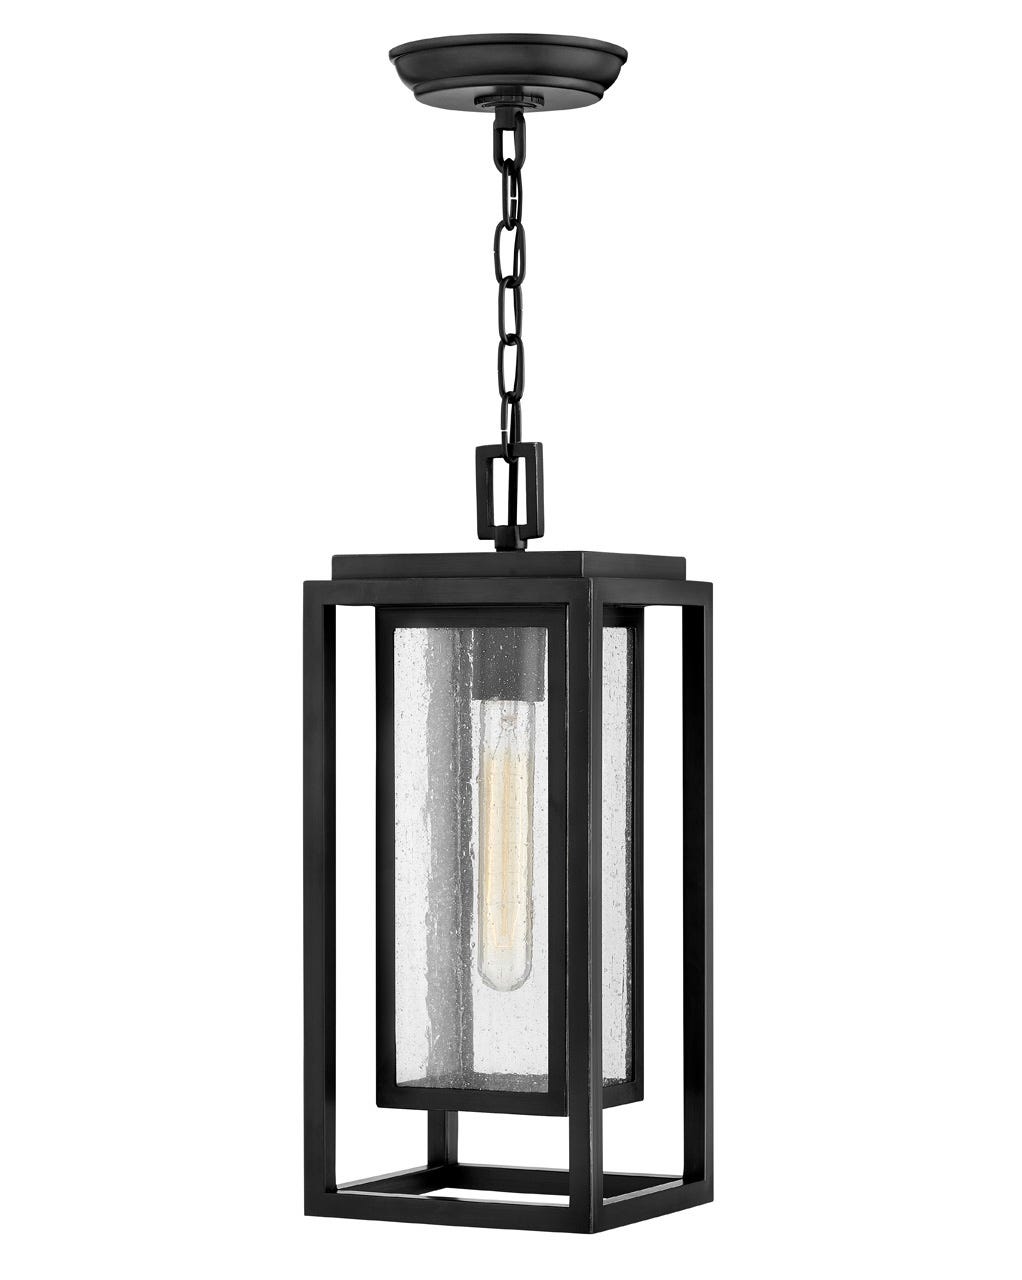 OUTDOOR REPUBLIC Hanging Lantern Outdoor Light Fixture l Hanging Maxim Black 6.0x7.0x16.75 